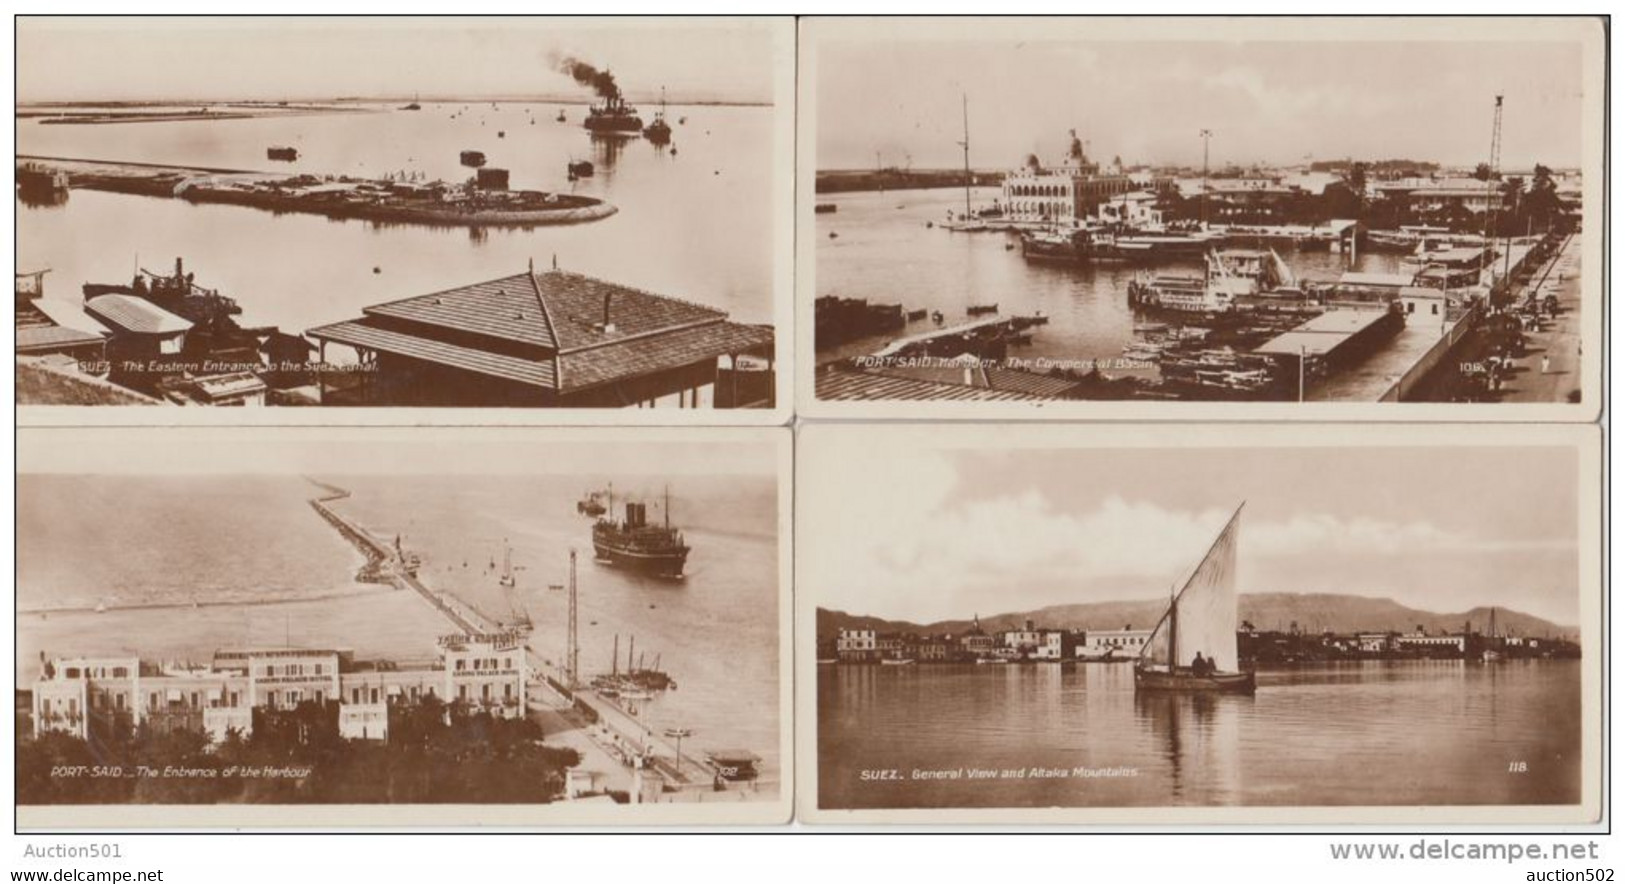 19412g PORT SAID - Pochette 11/20 Cartes Photo - Série 144 - 15x7.6c - Port Said